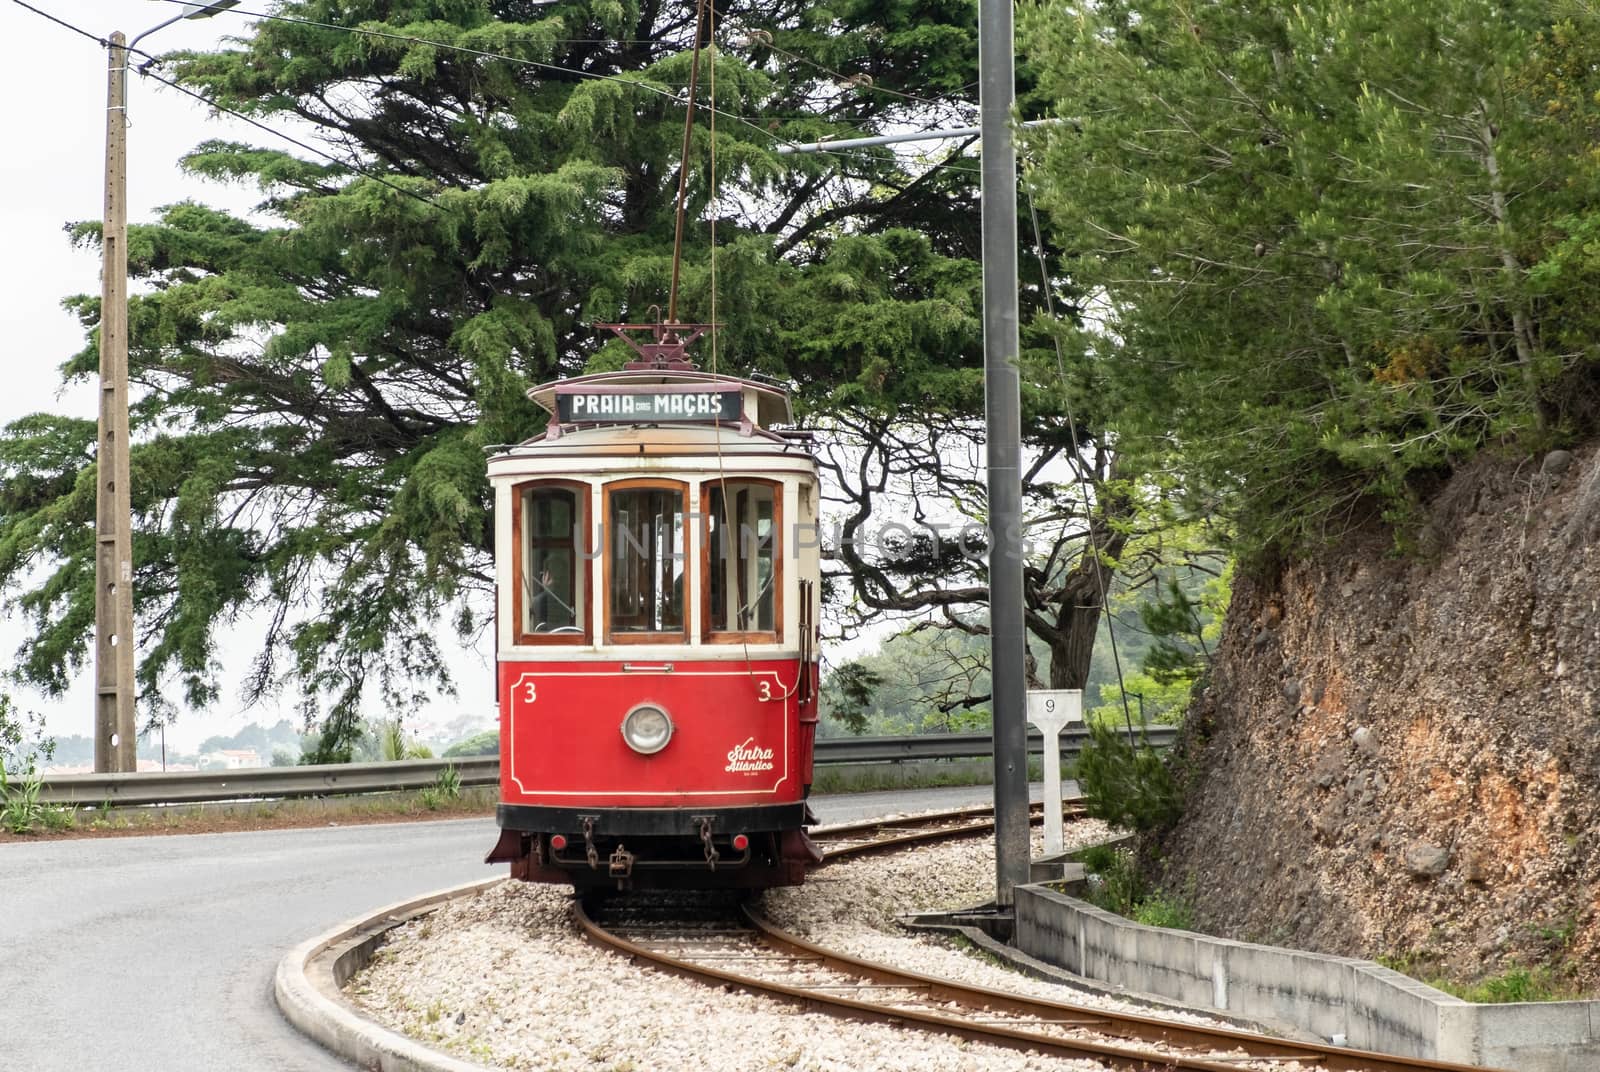 Historic Sintra tram seen in Sintra area, Portugal.